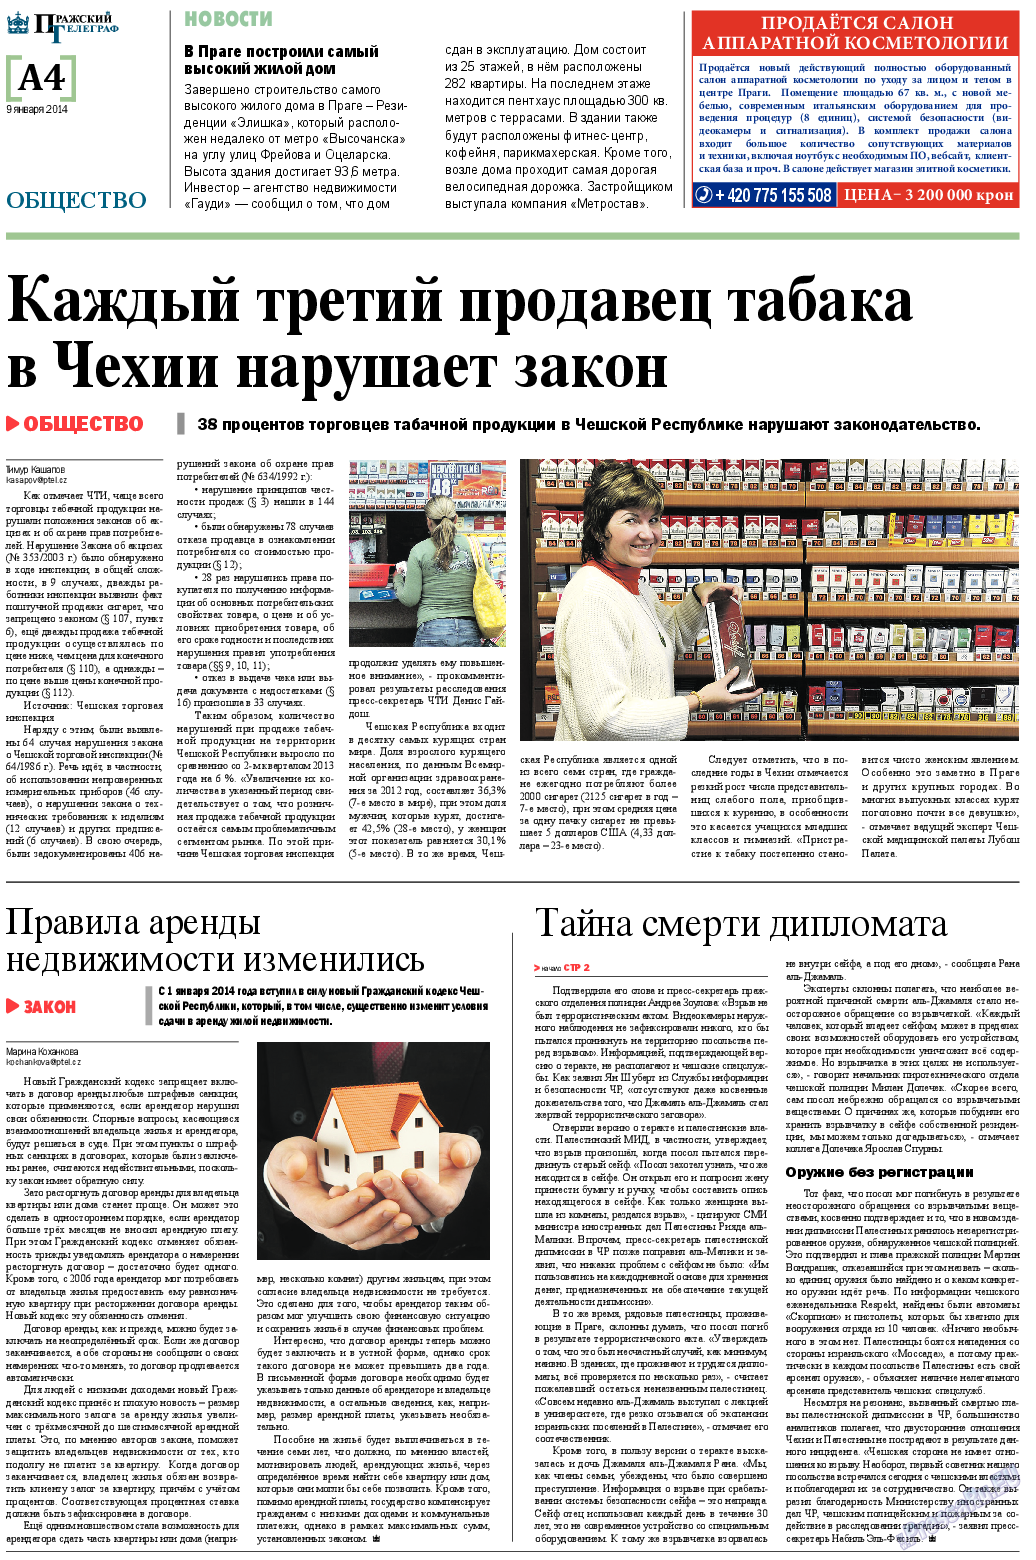 Пражский телеграф, газета. 2014 №2 стр.4